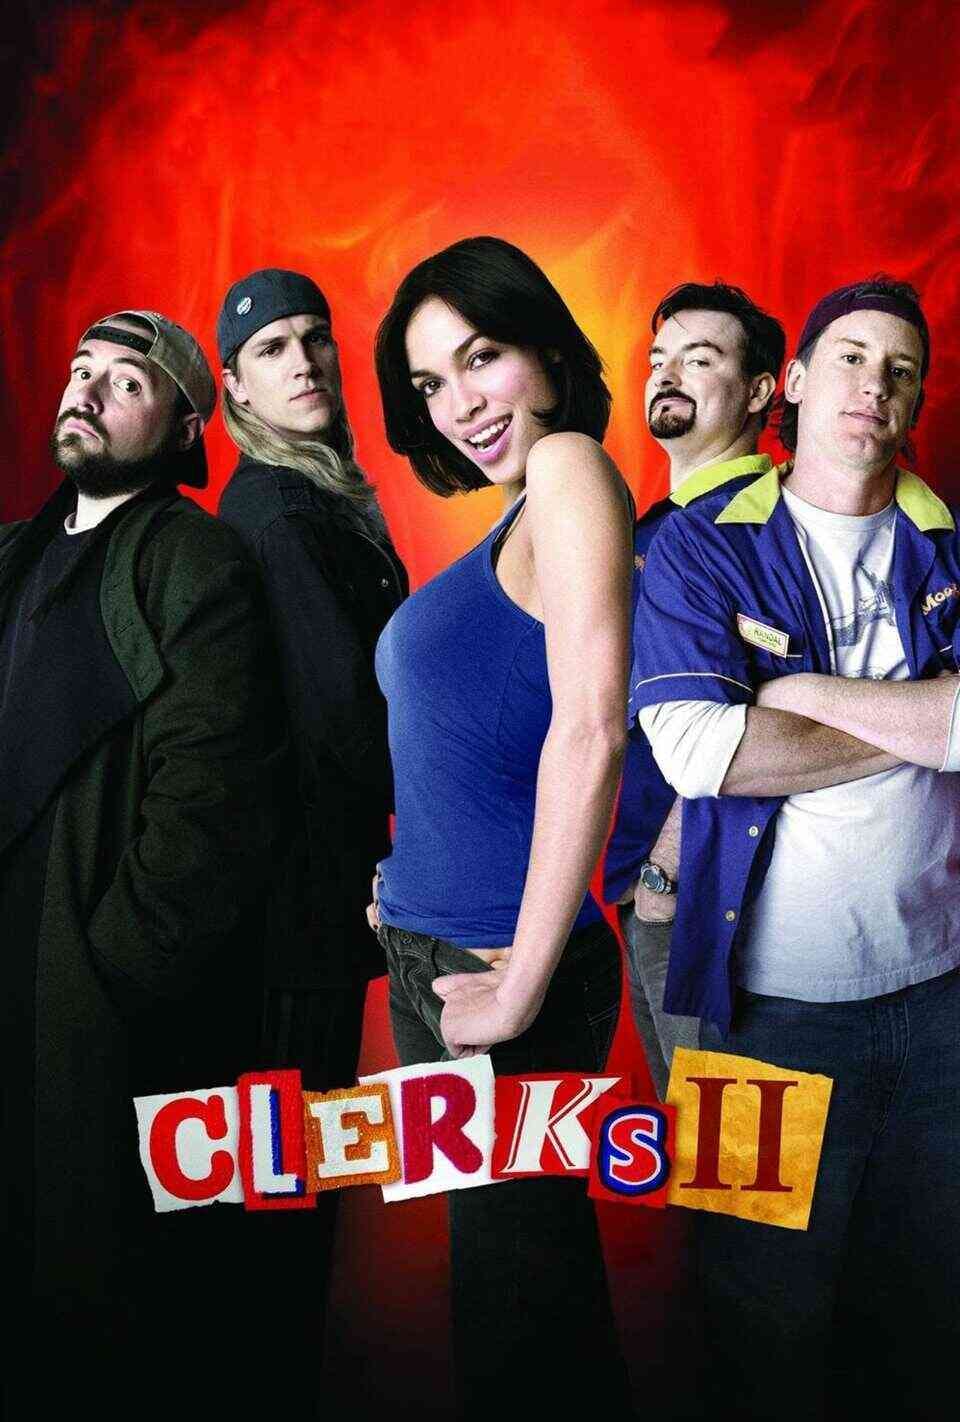 Read Clerks II screenplay.